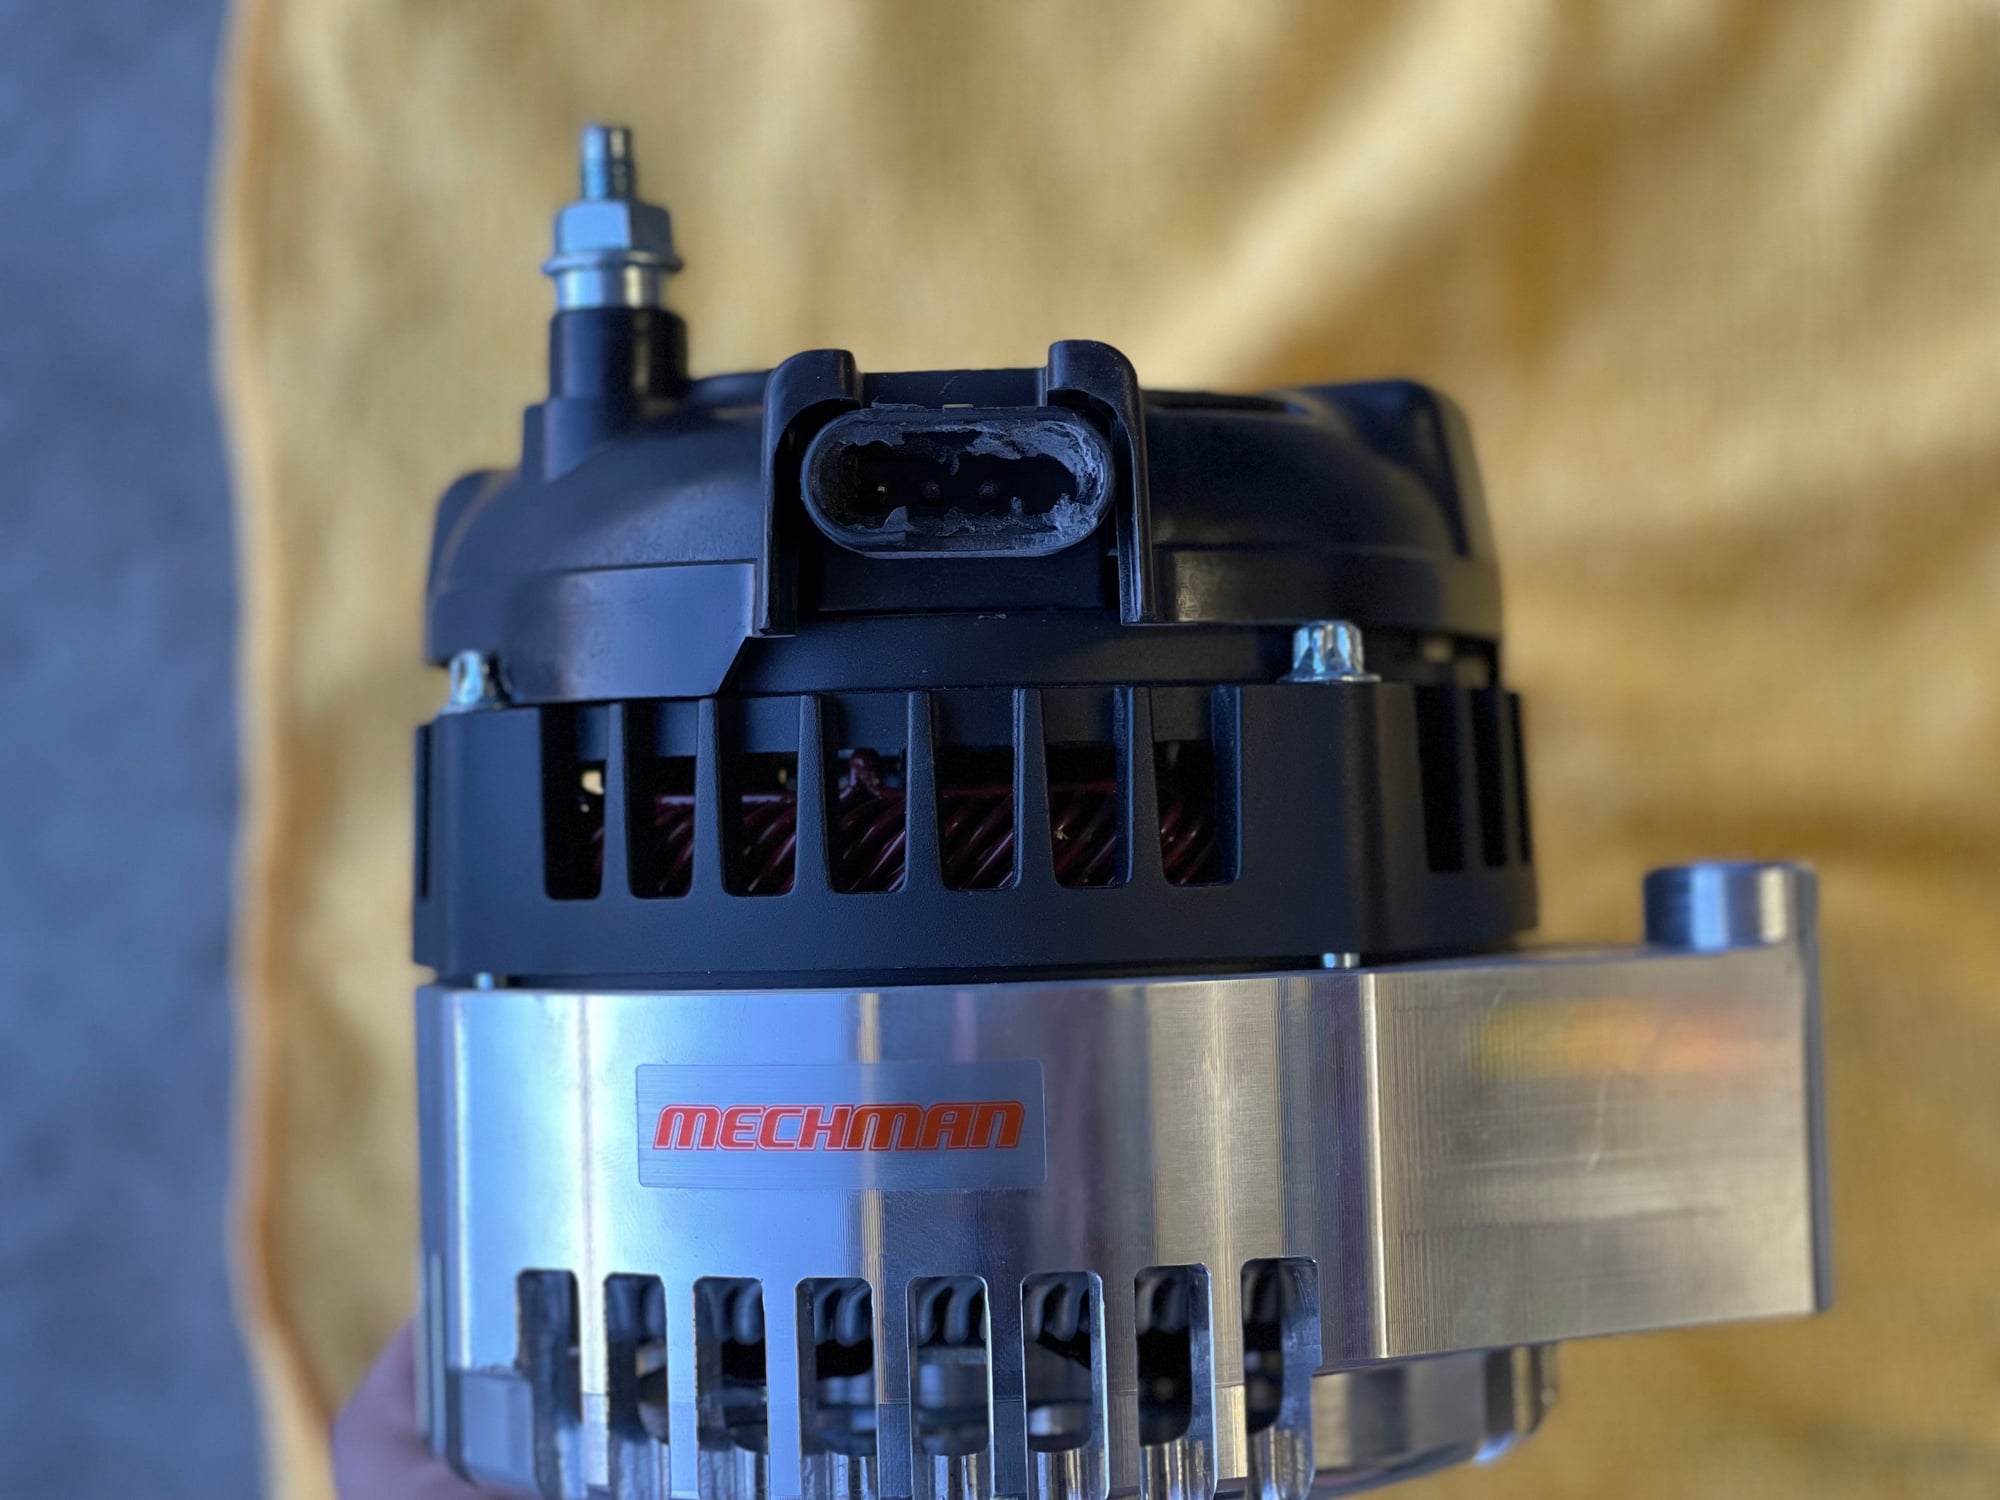 Engine - Electrical - Mechman Alternator - New - Lancaster, CA 93536, United States